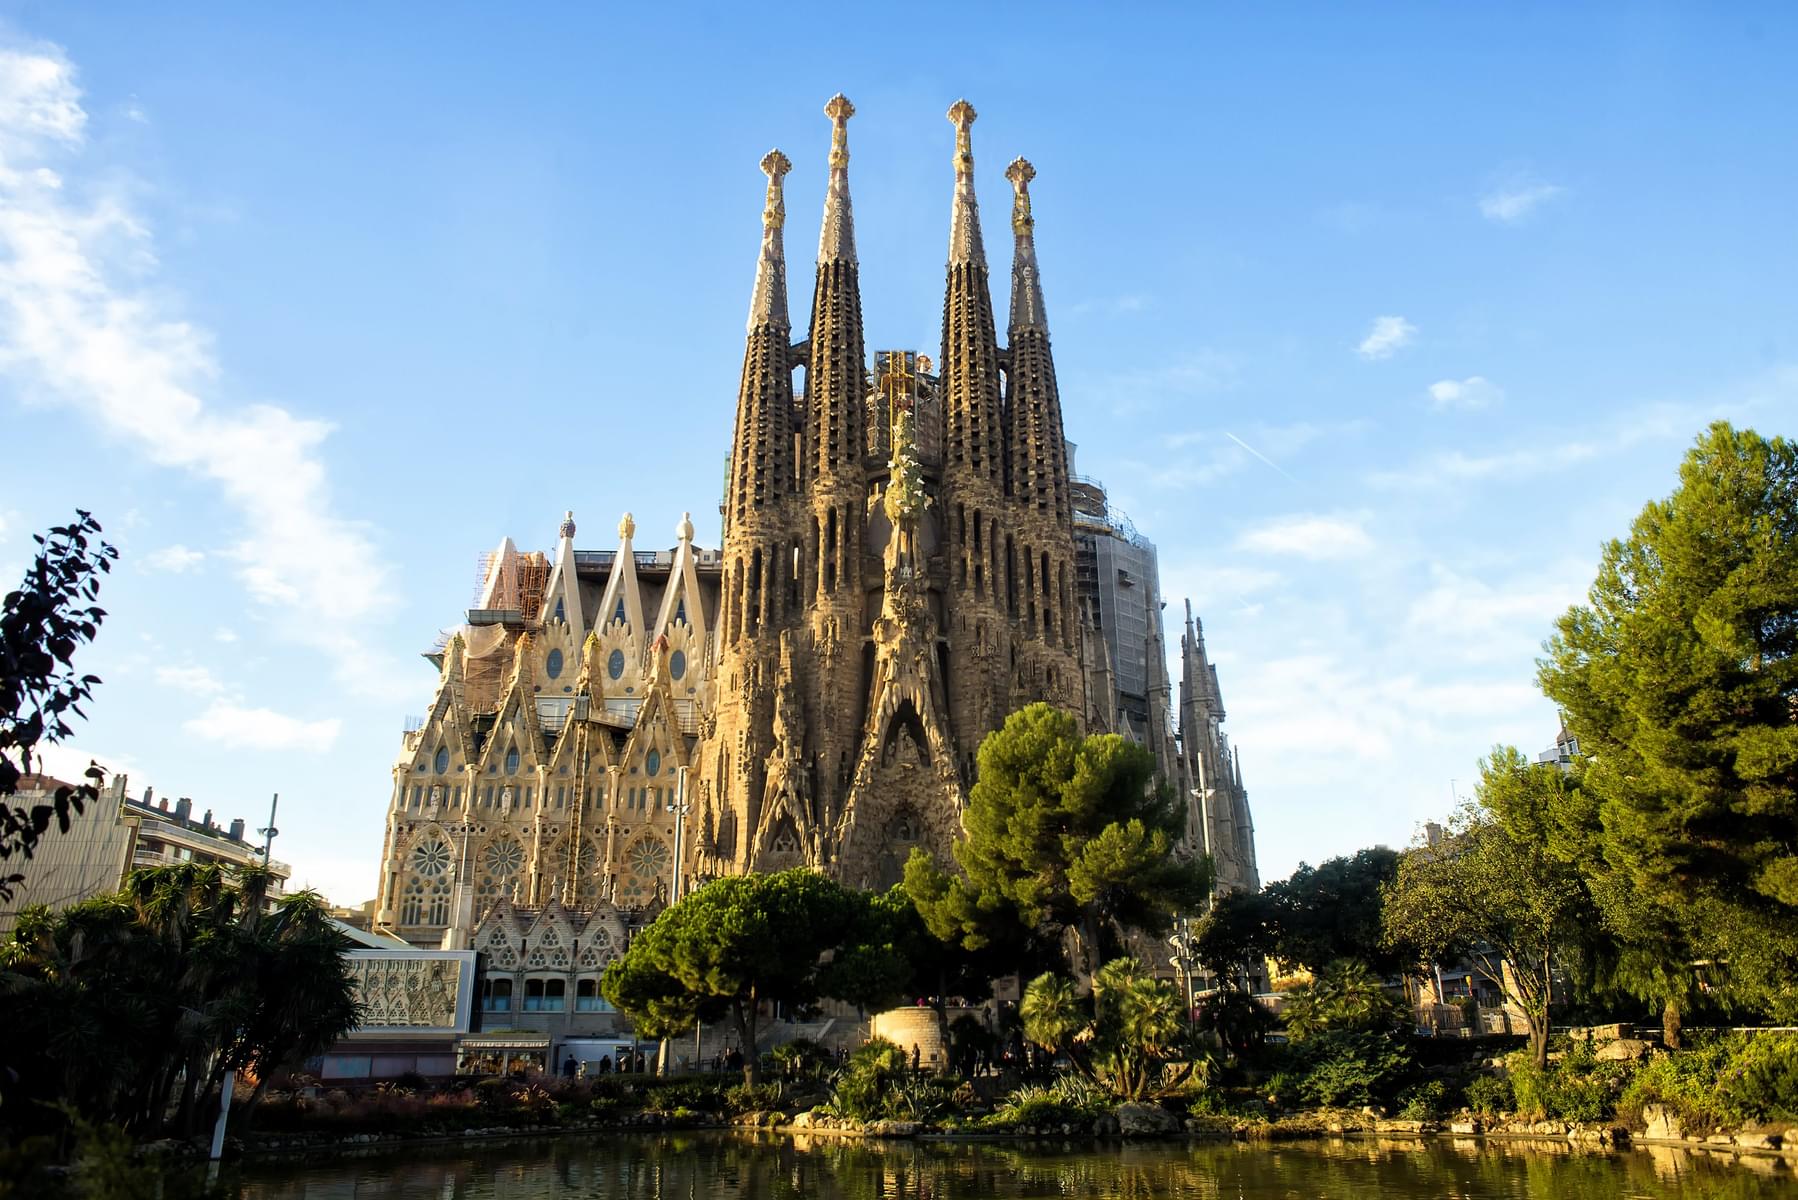 Why You Should Visit Sagrada Familia?